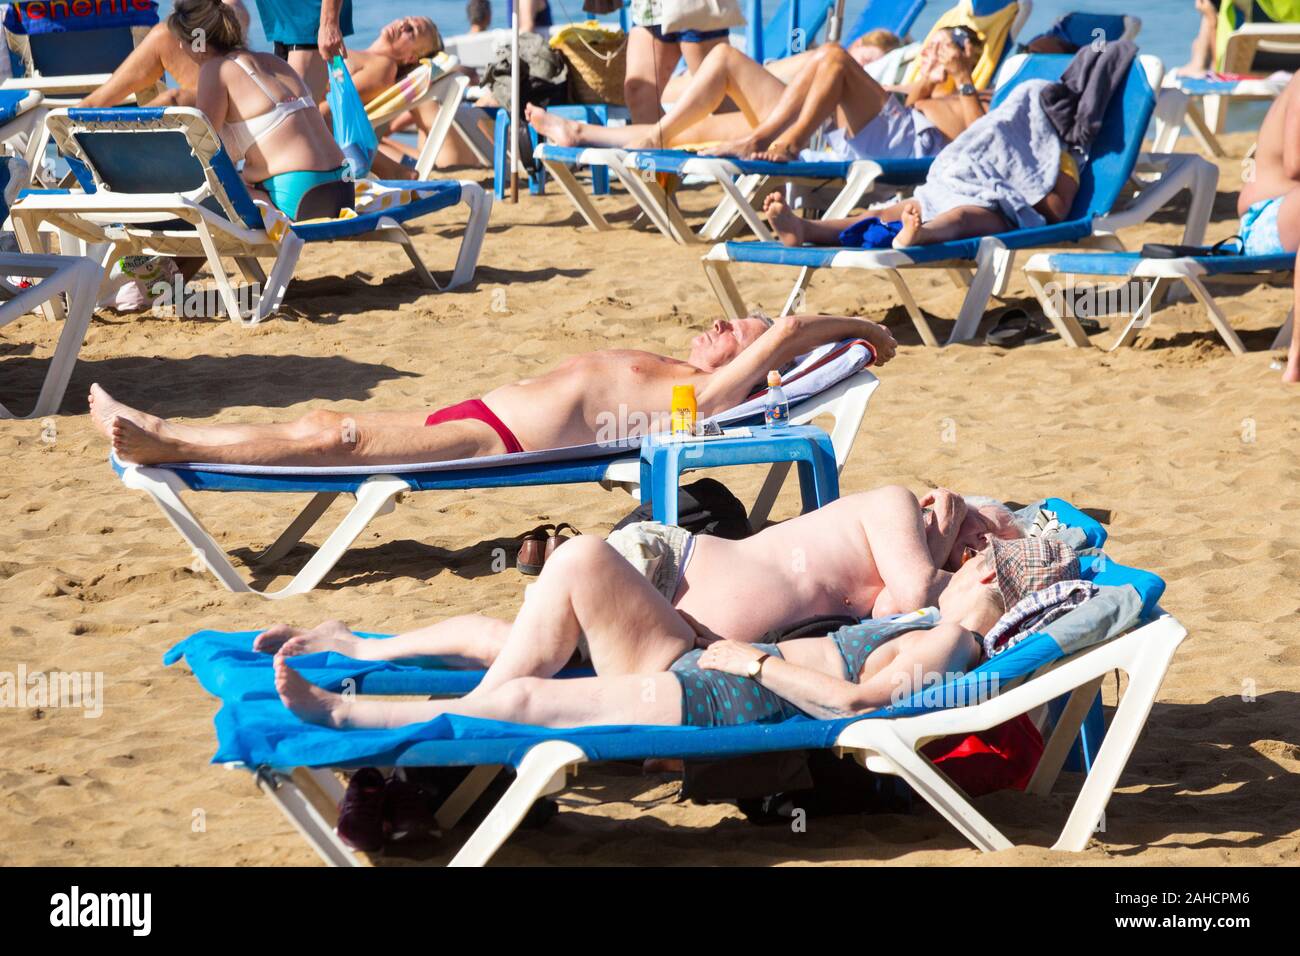 Tourists sunbathing on city beach in Las Palmas on Gran Canaria. A popular winter sun destination for many Brits. Stock Photo